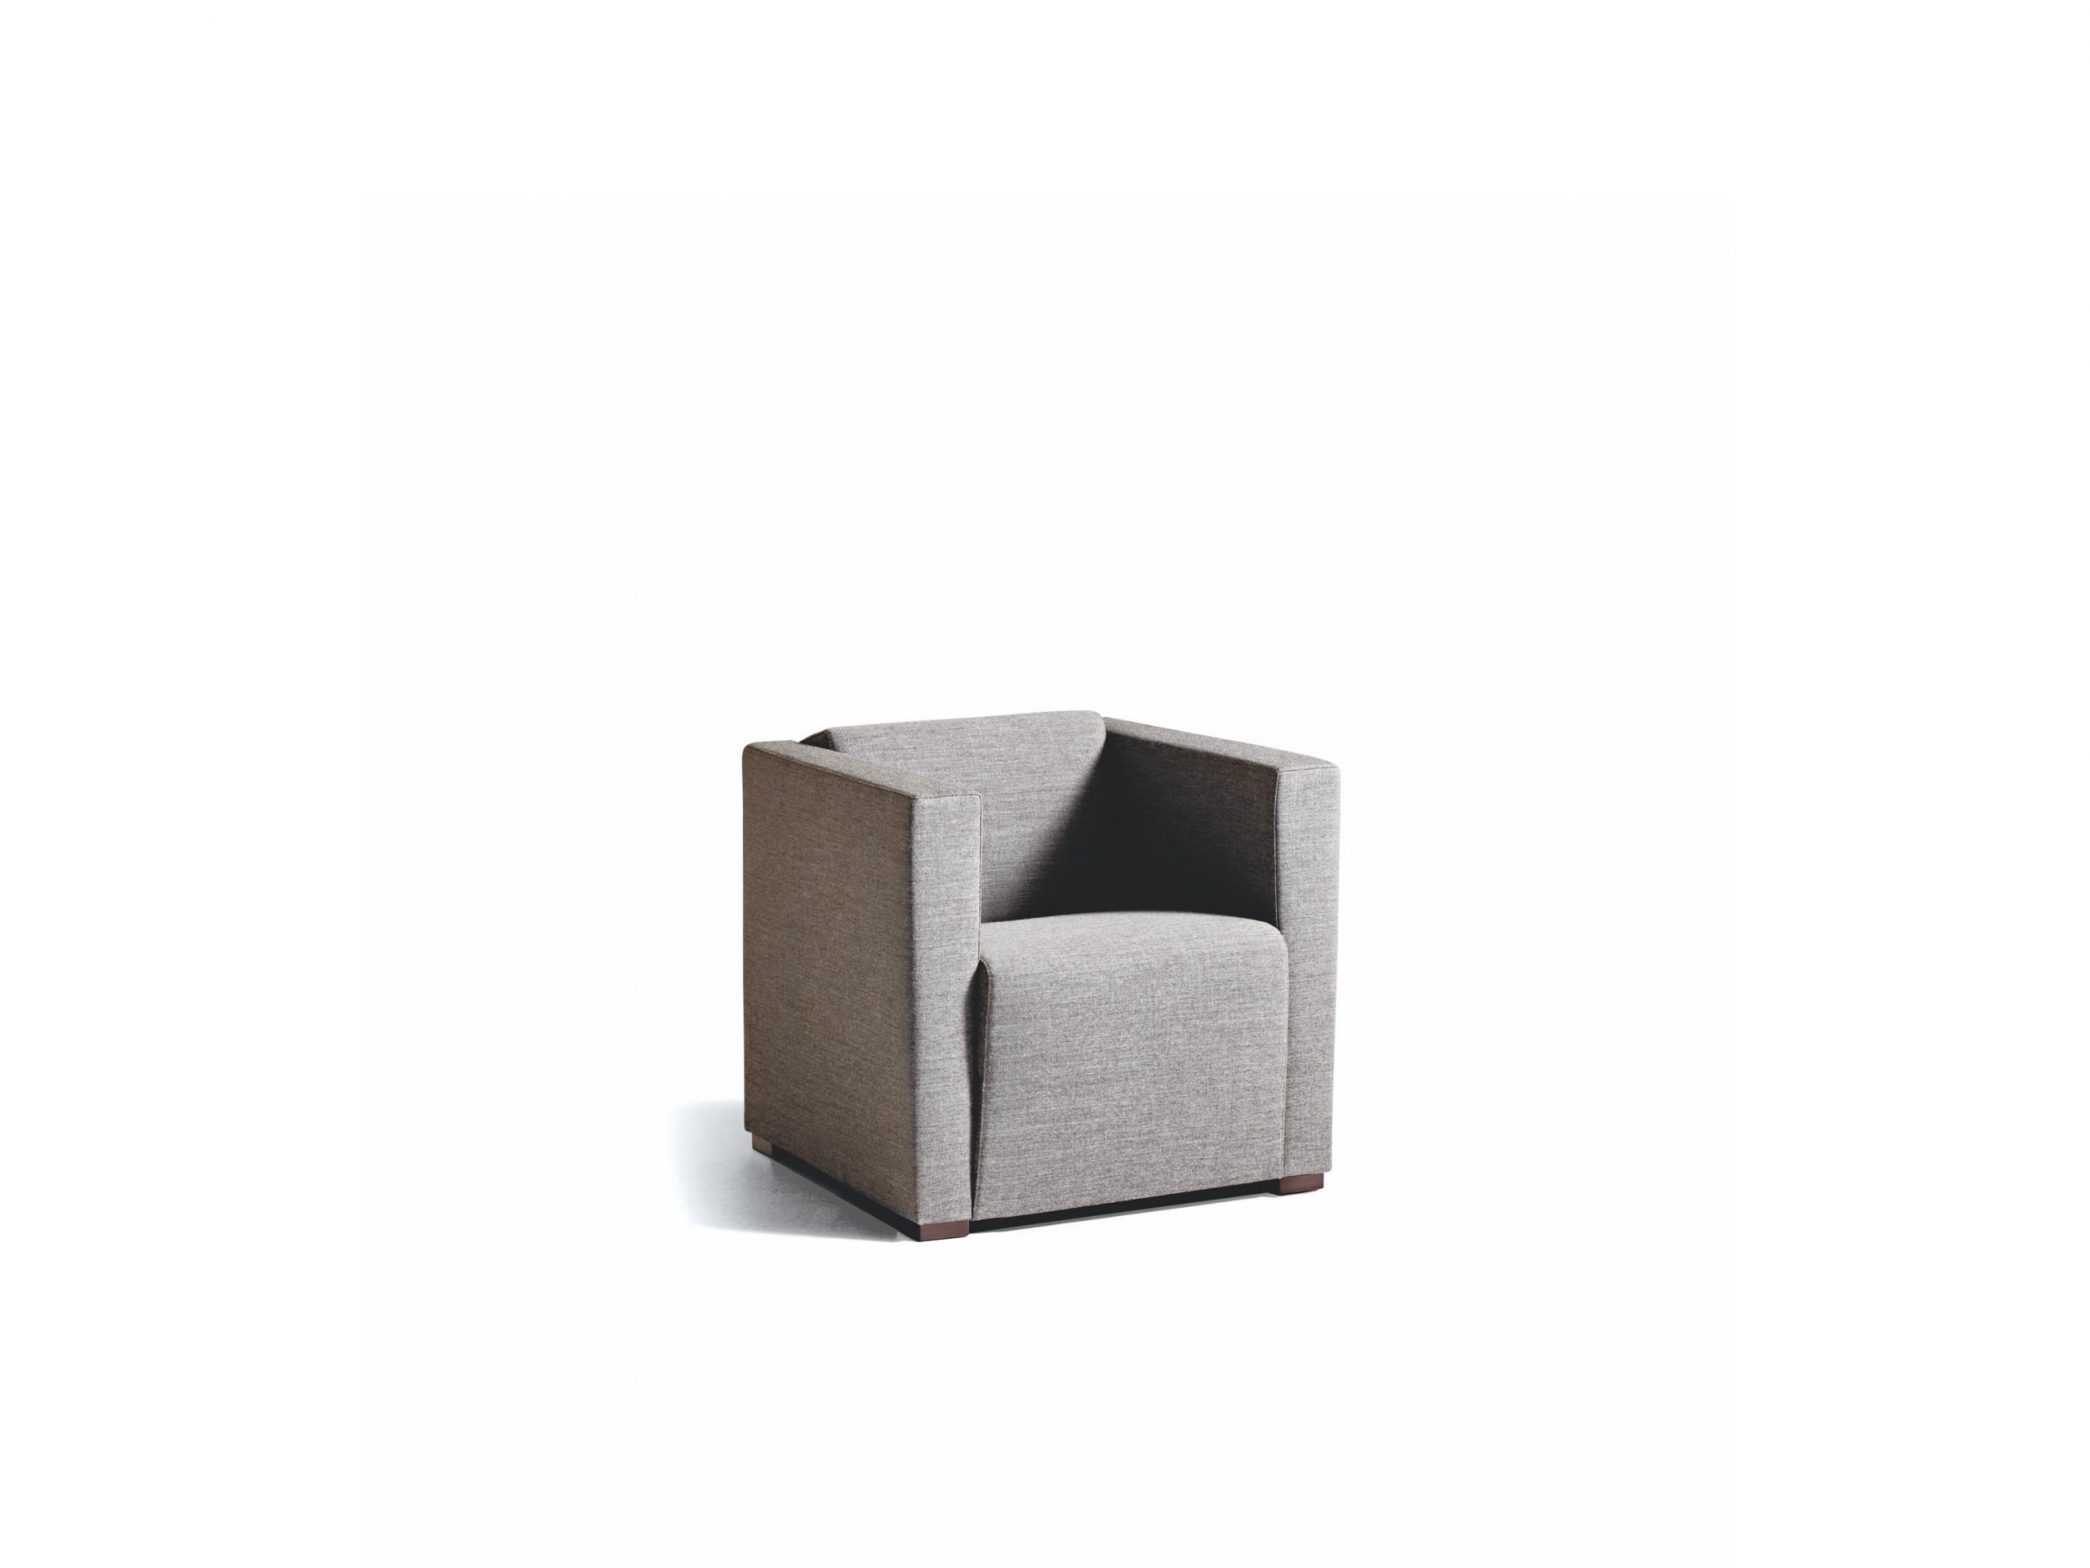 cubus-small-armchair-landscape-2090x1568